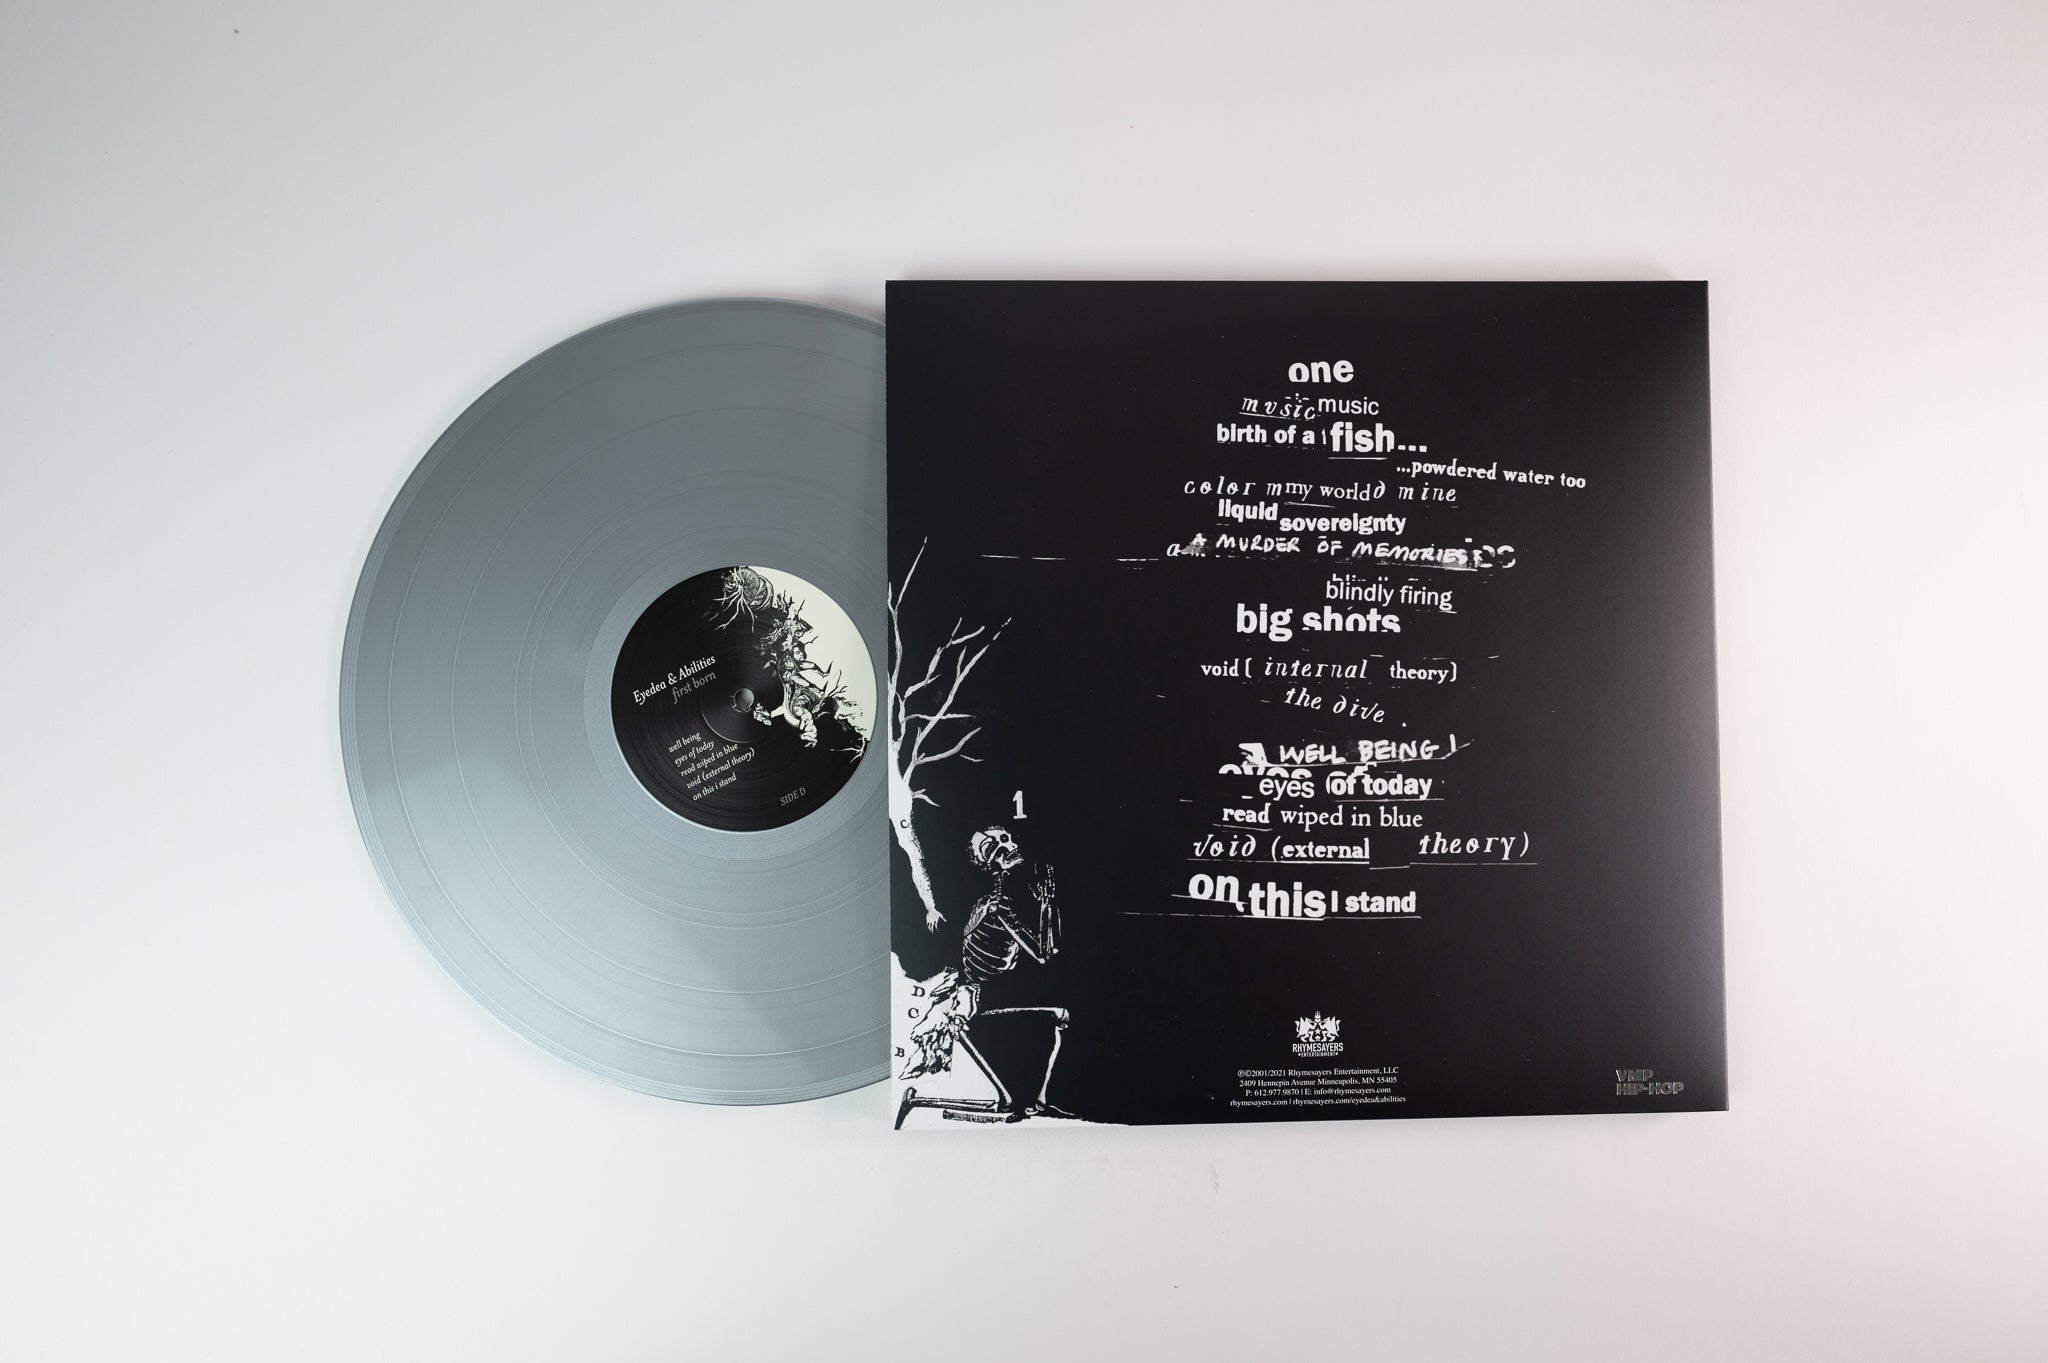 Eyedea & Abilities - First Born on Rhymesayers Entertainment / Vinyl Me, Please - Maroon & Silver Vinyl